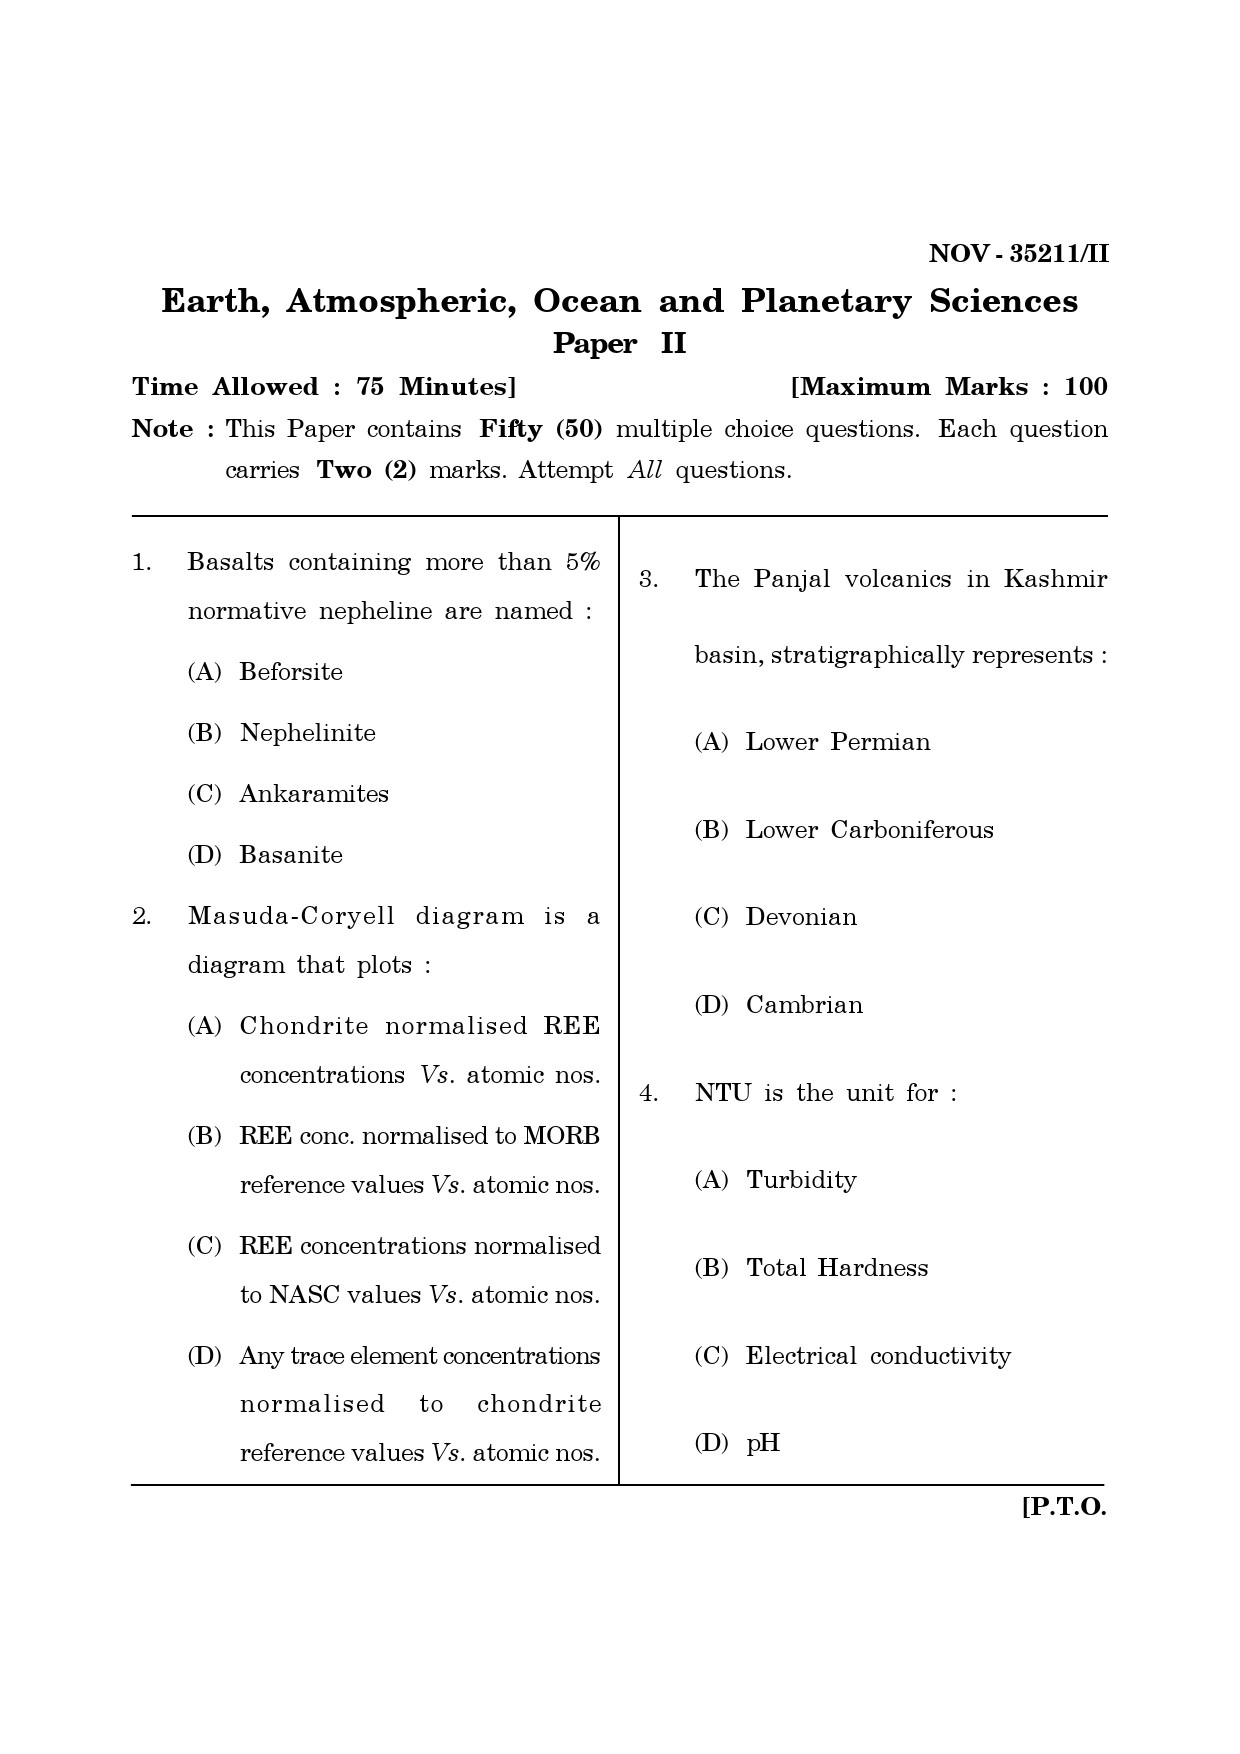 Maharashtra SET Earth Atmospheric Ocean Planetary Science Question Paper II November 2011 1